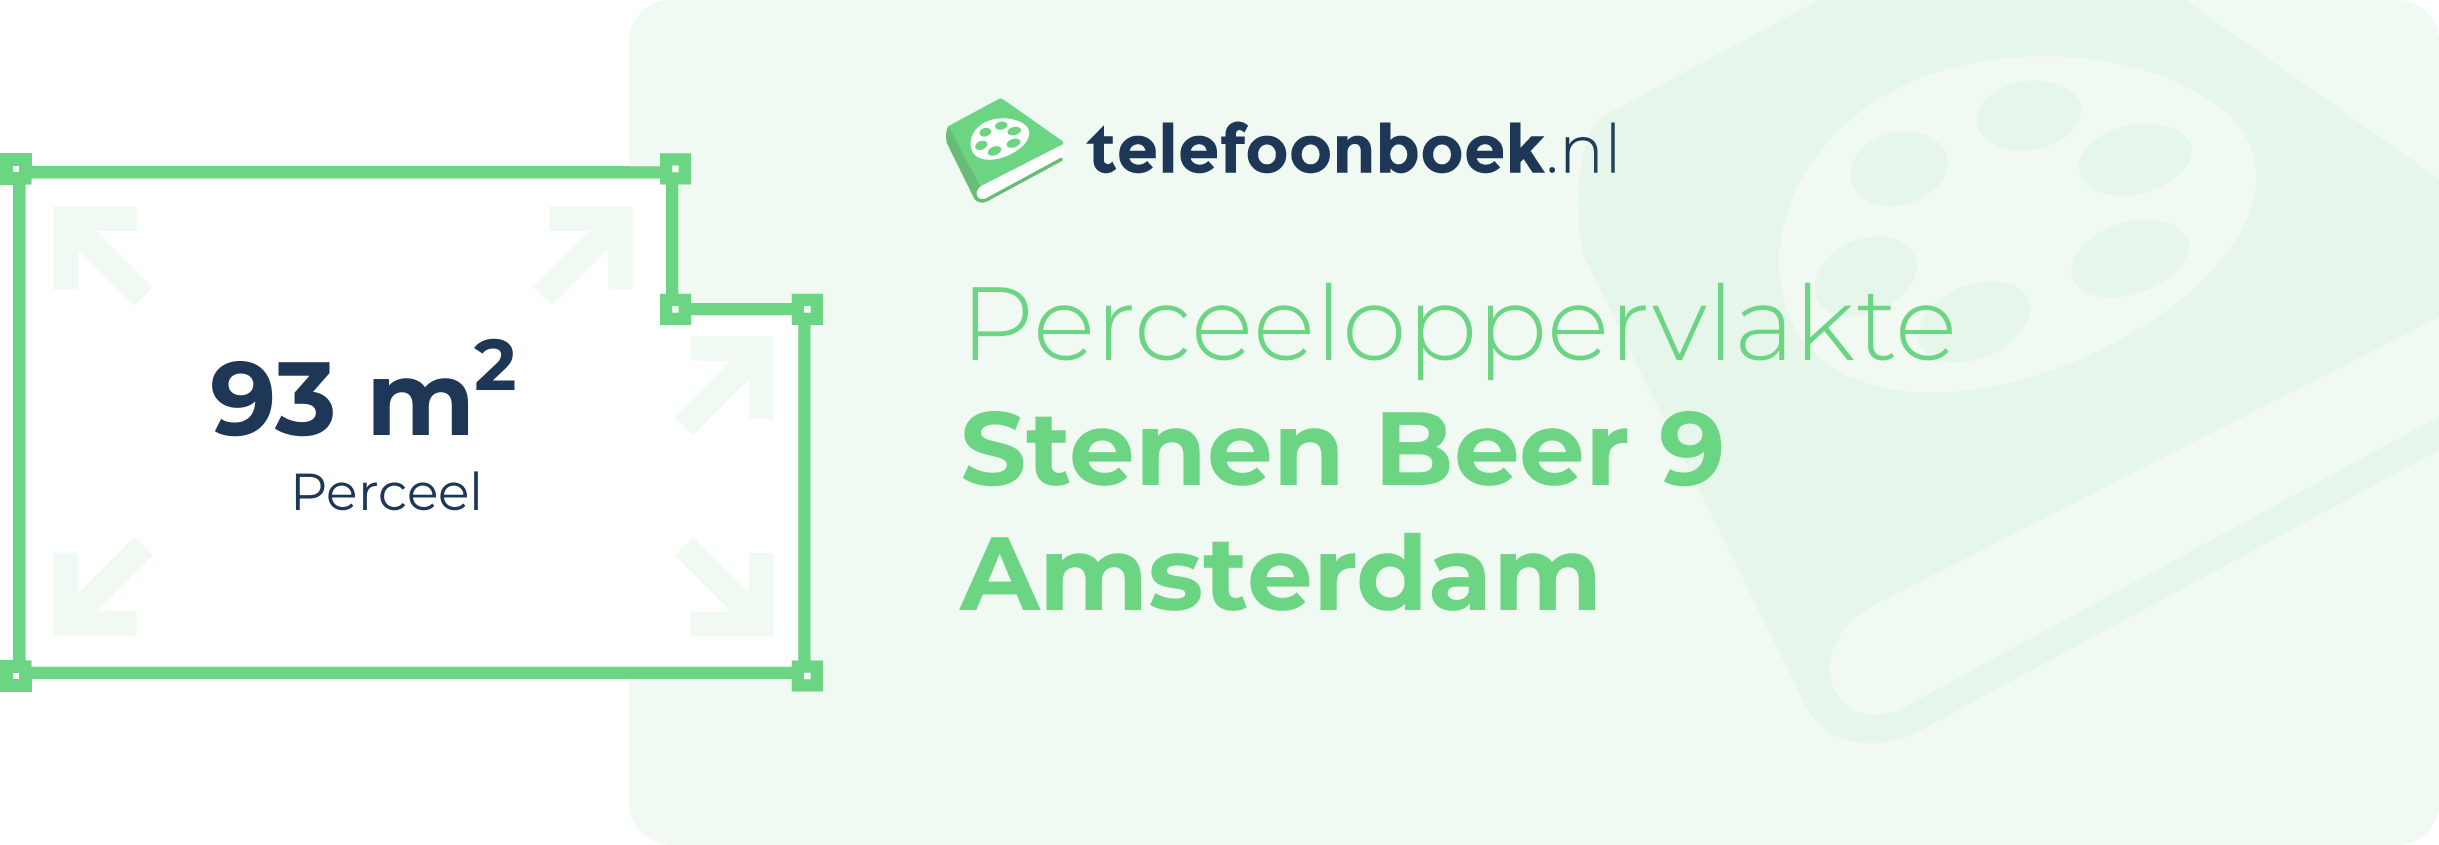 Perceeloppervlakte Stenen Beer 9 Amsterdam